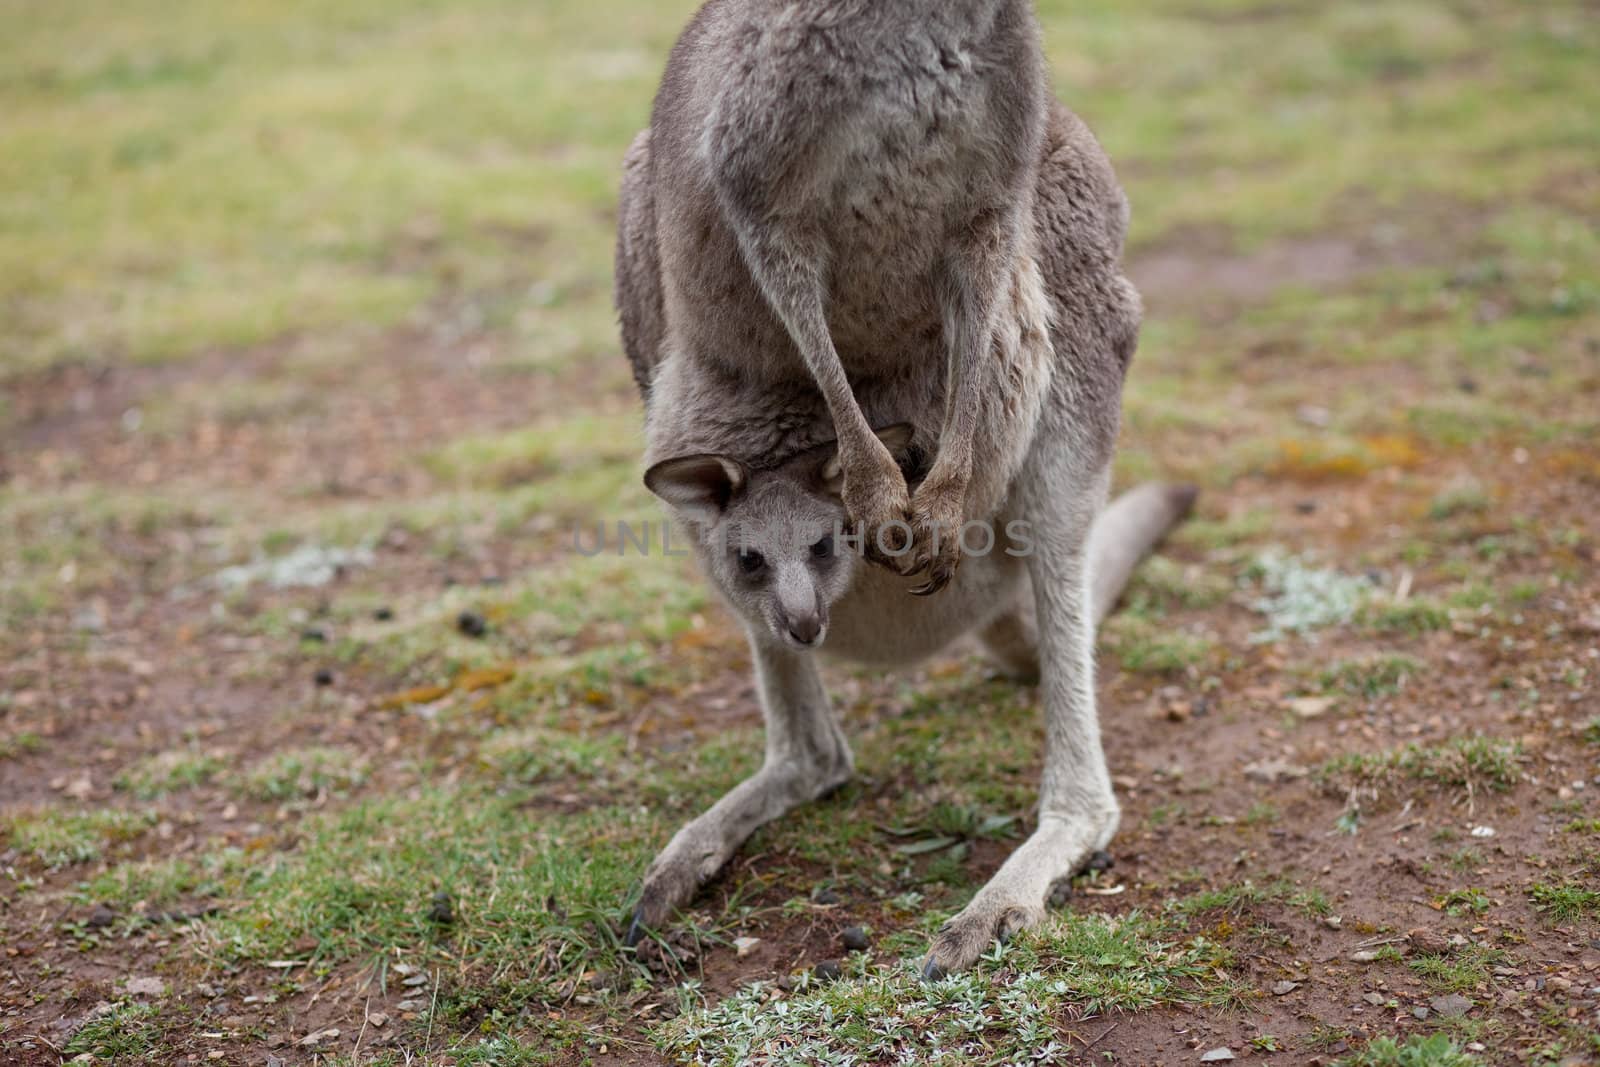 Kangaroo with baby by edan